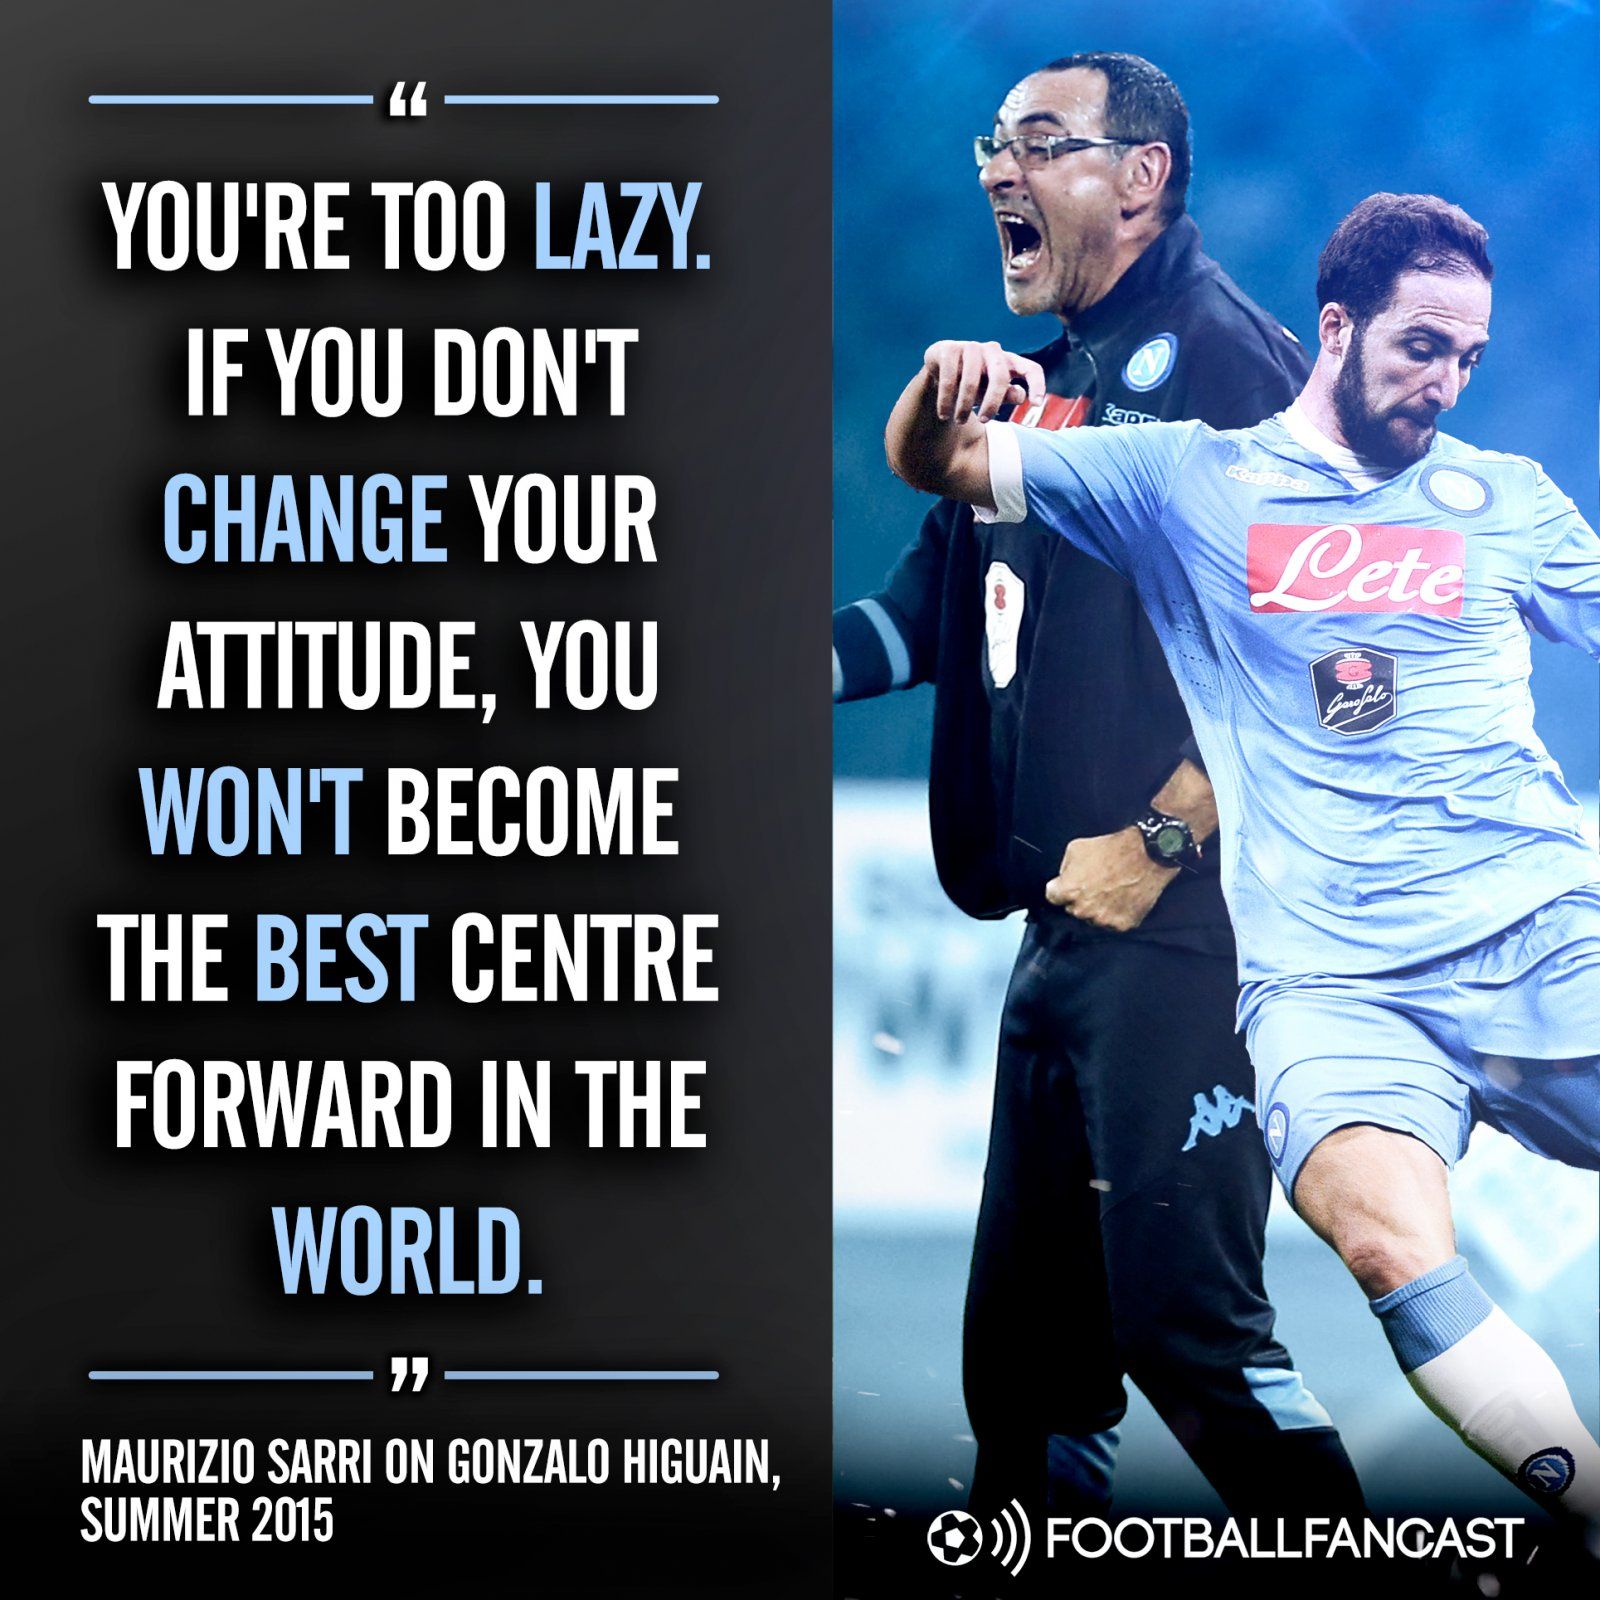 Maurizio Sarri's quote on lazy Gonzalo Higuain